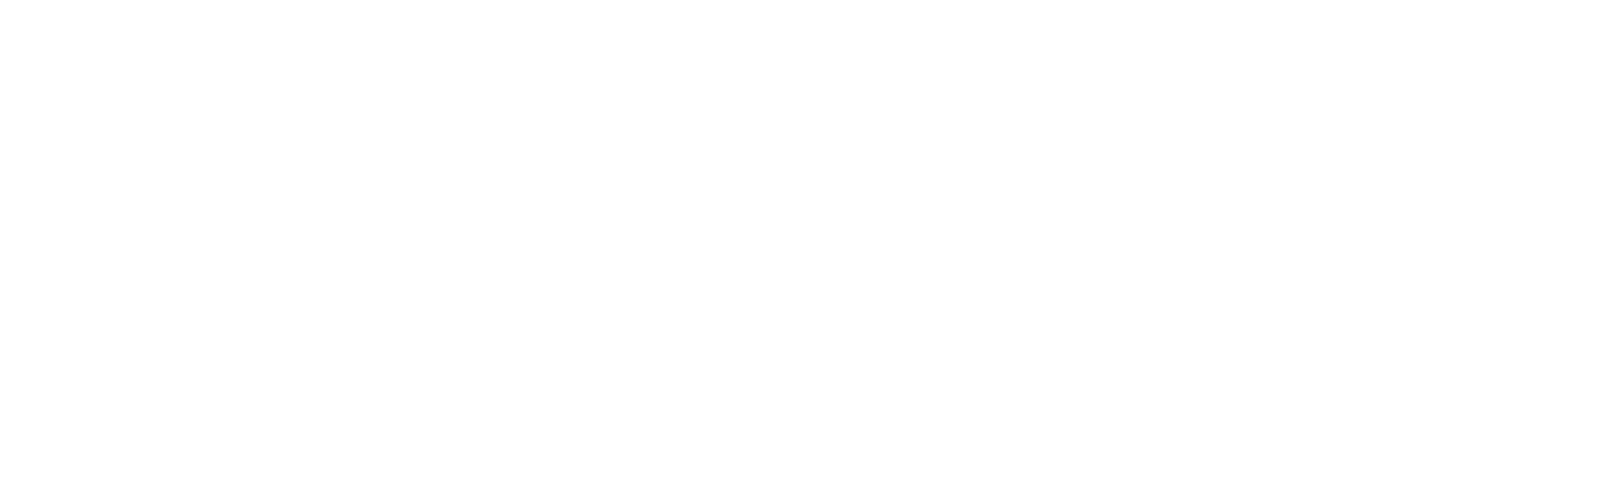 Obkircherhof